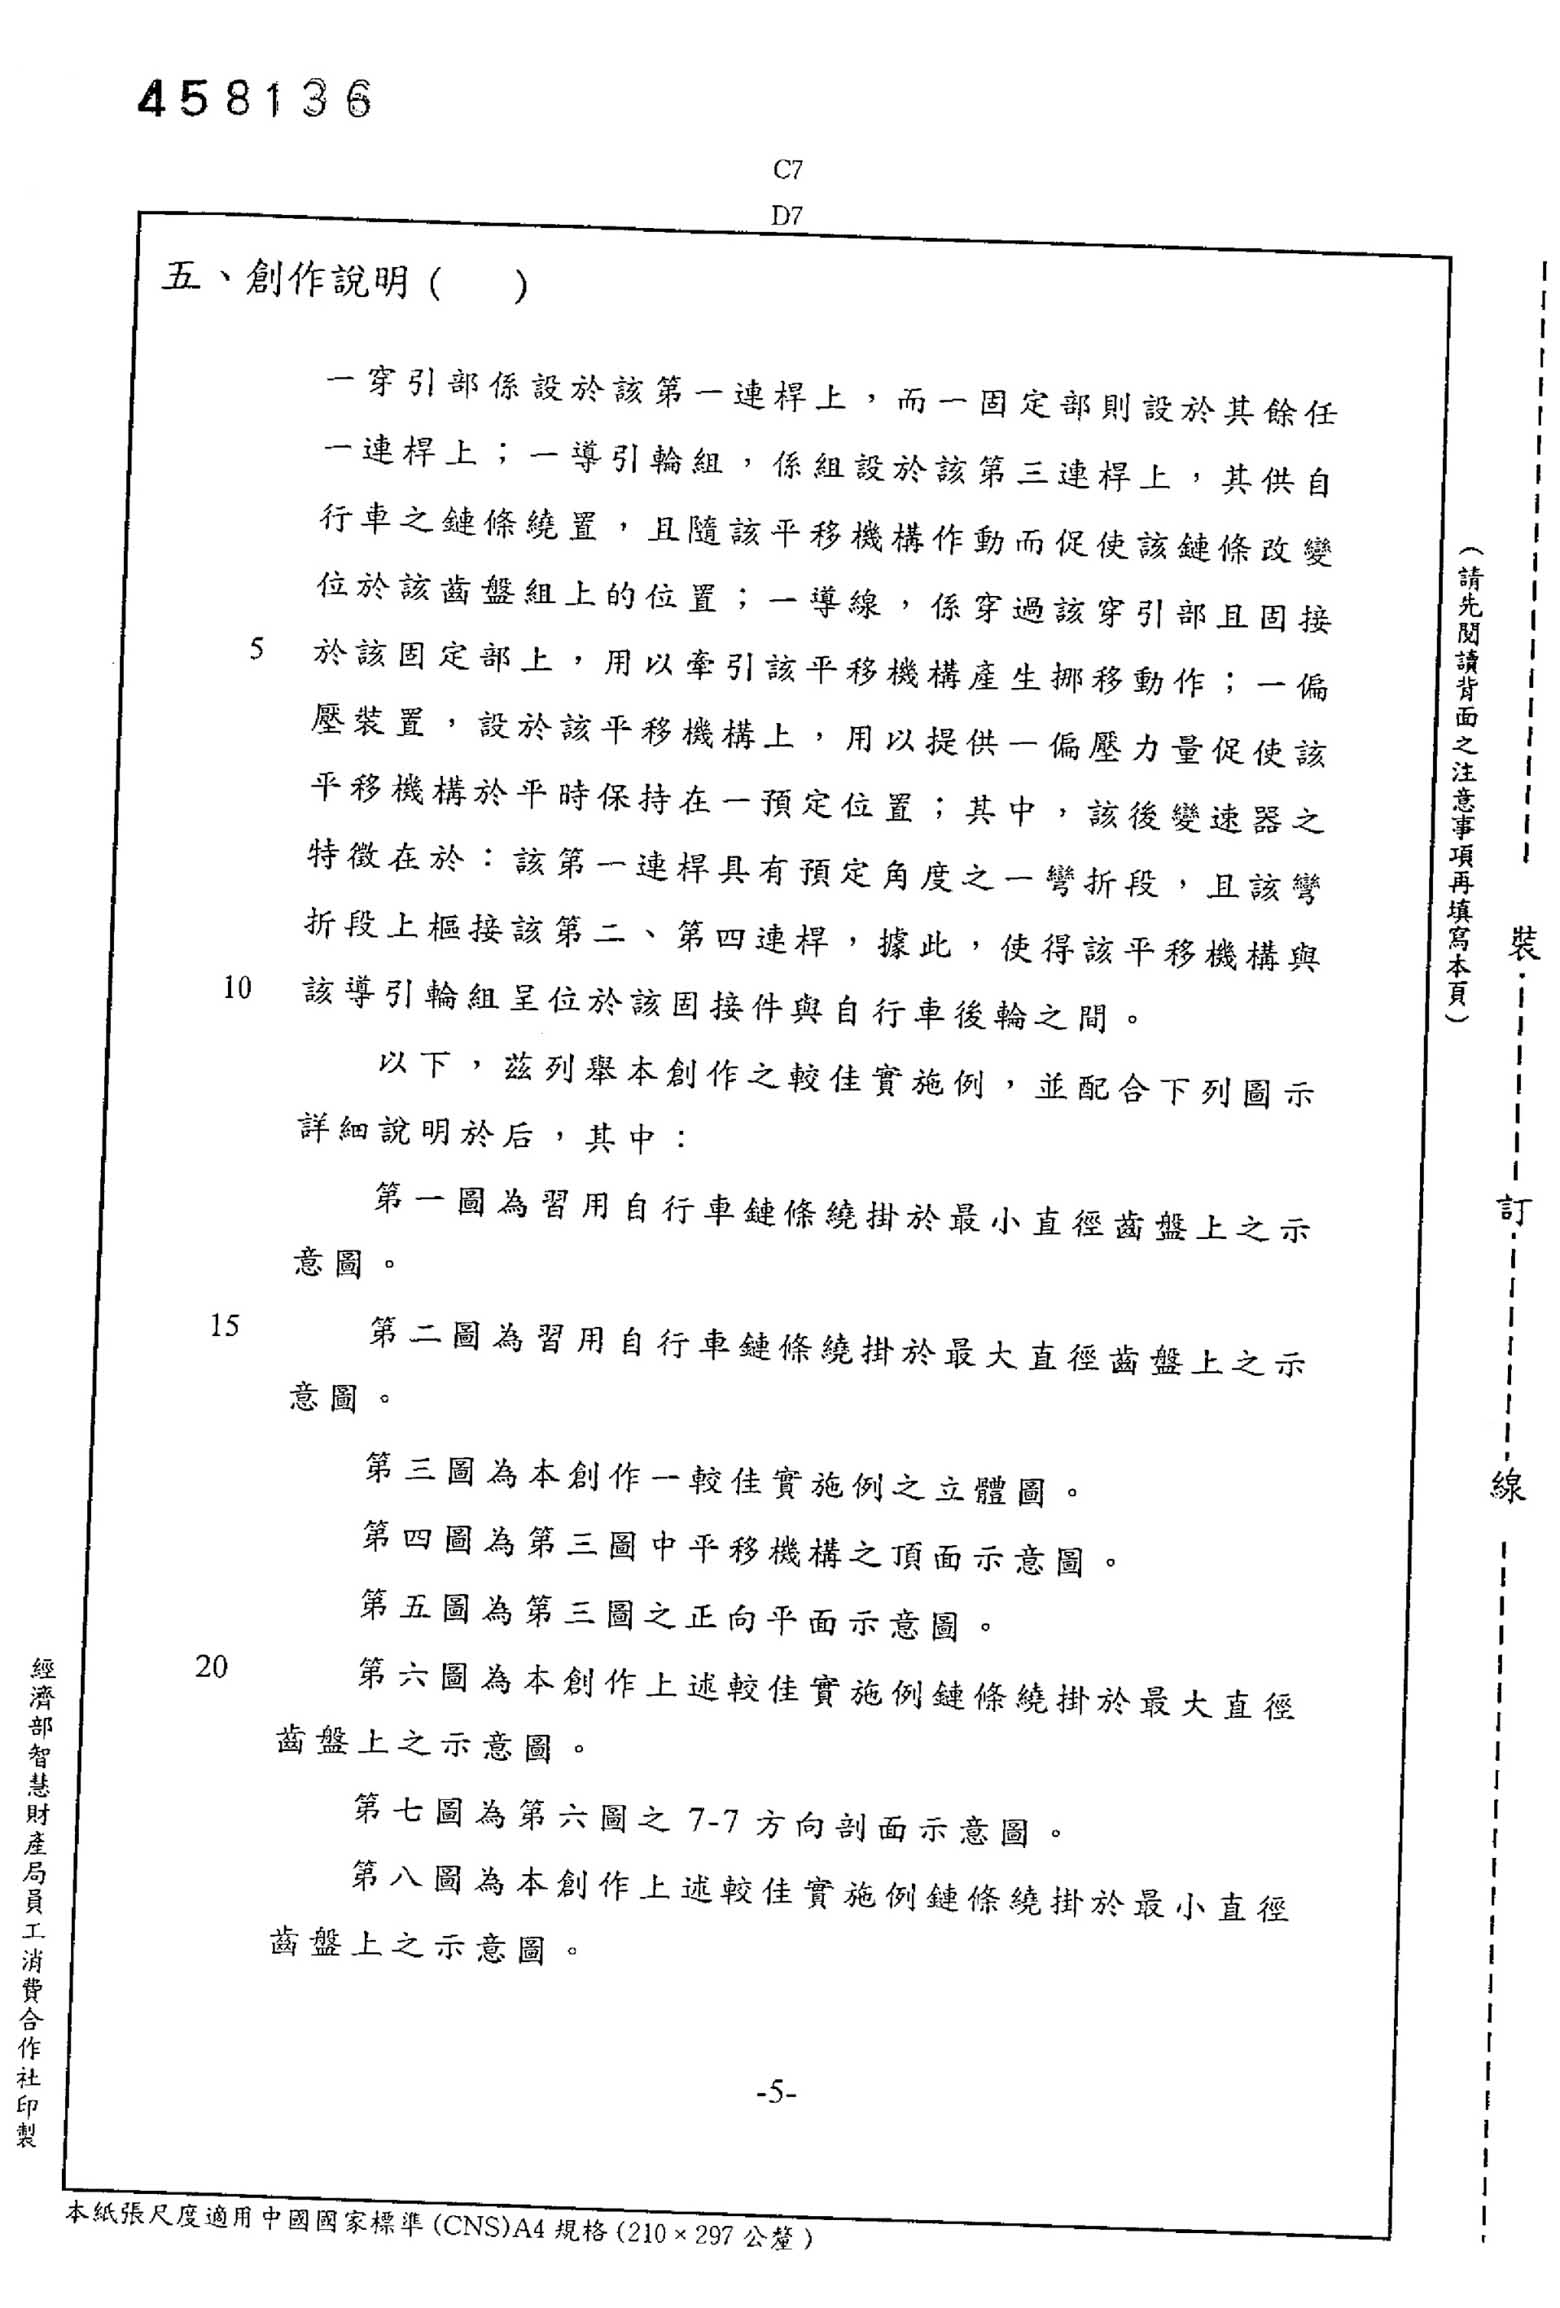 Taiwan patent 458,136 - Falcon scan 5 main image